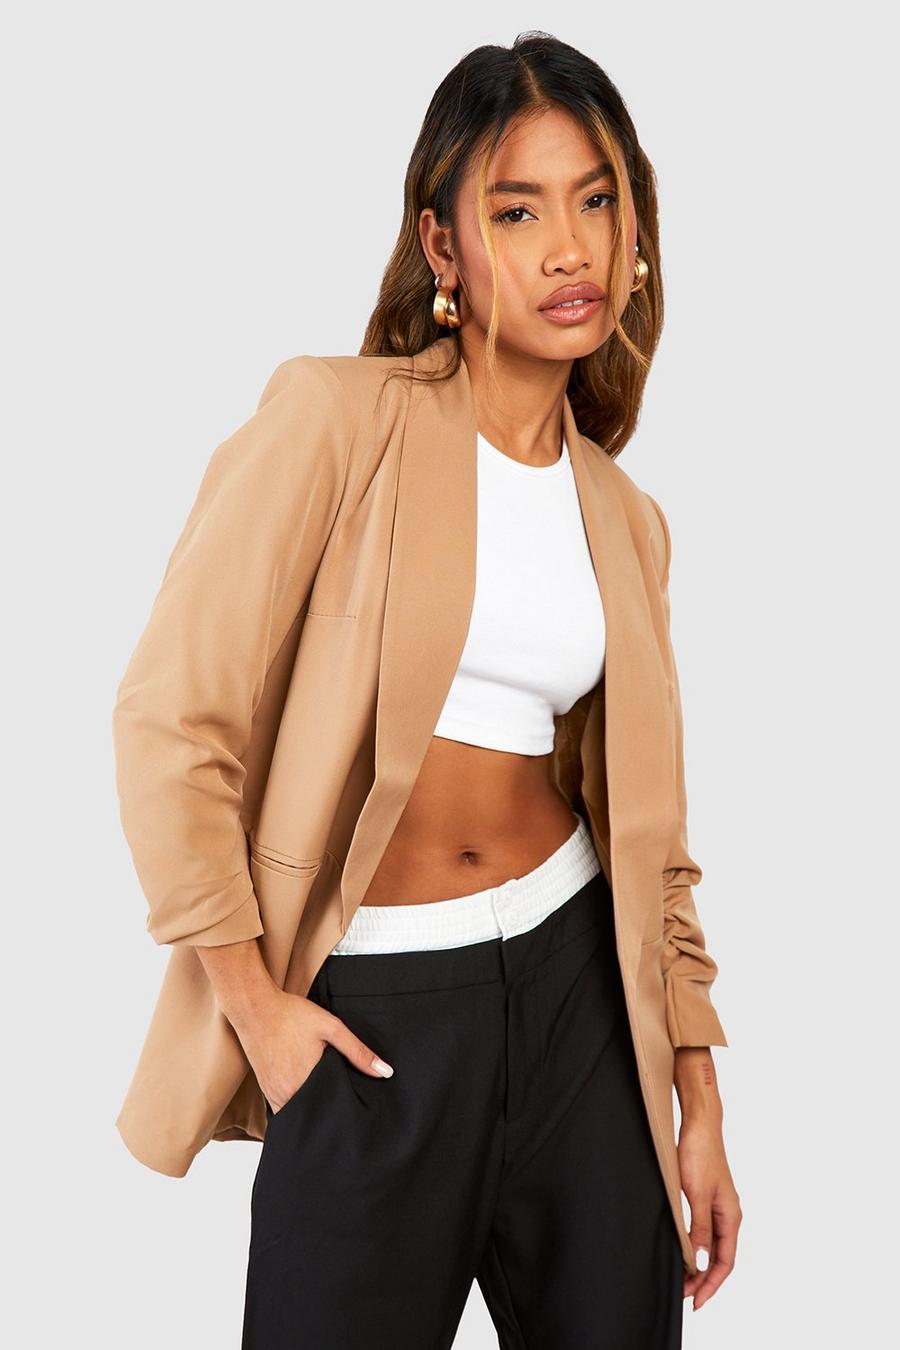 Genhoo Blazer Jackets for Women Open Front Long Sleeve Casual Work Office Blazers with Pockets S-2XL 